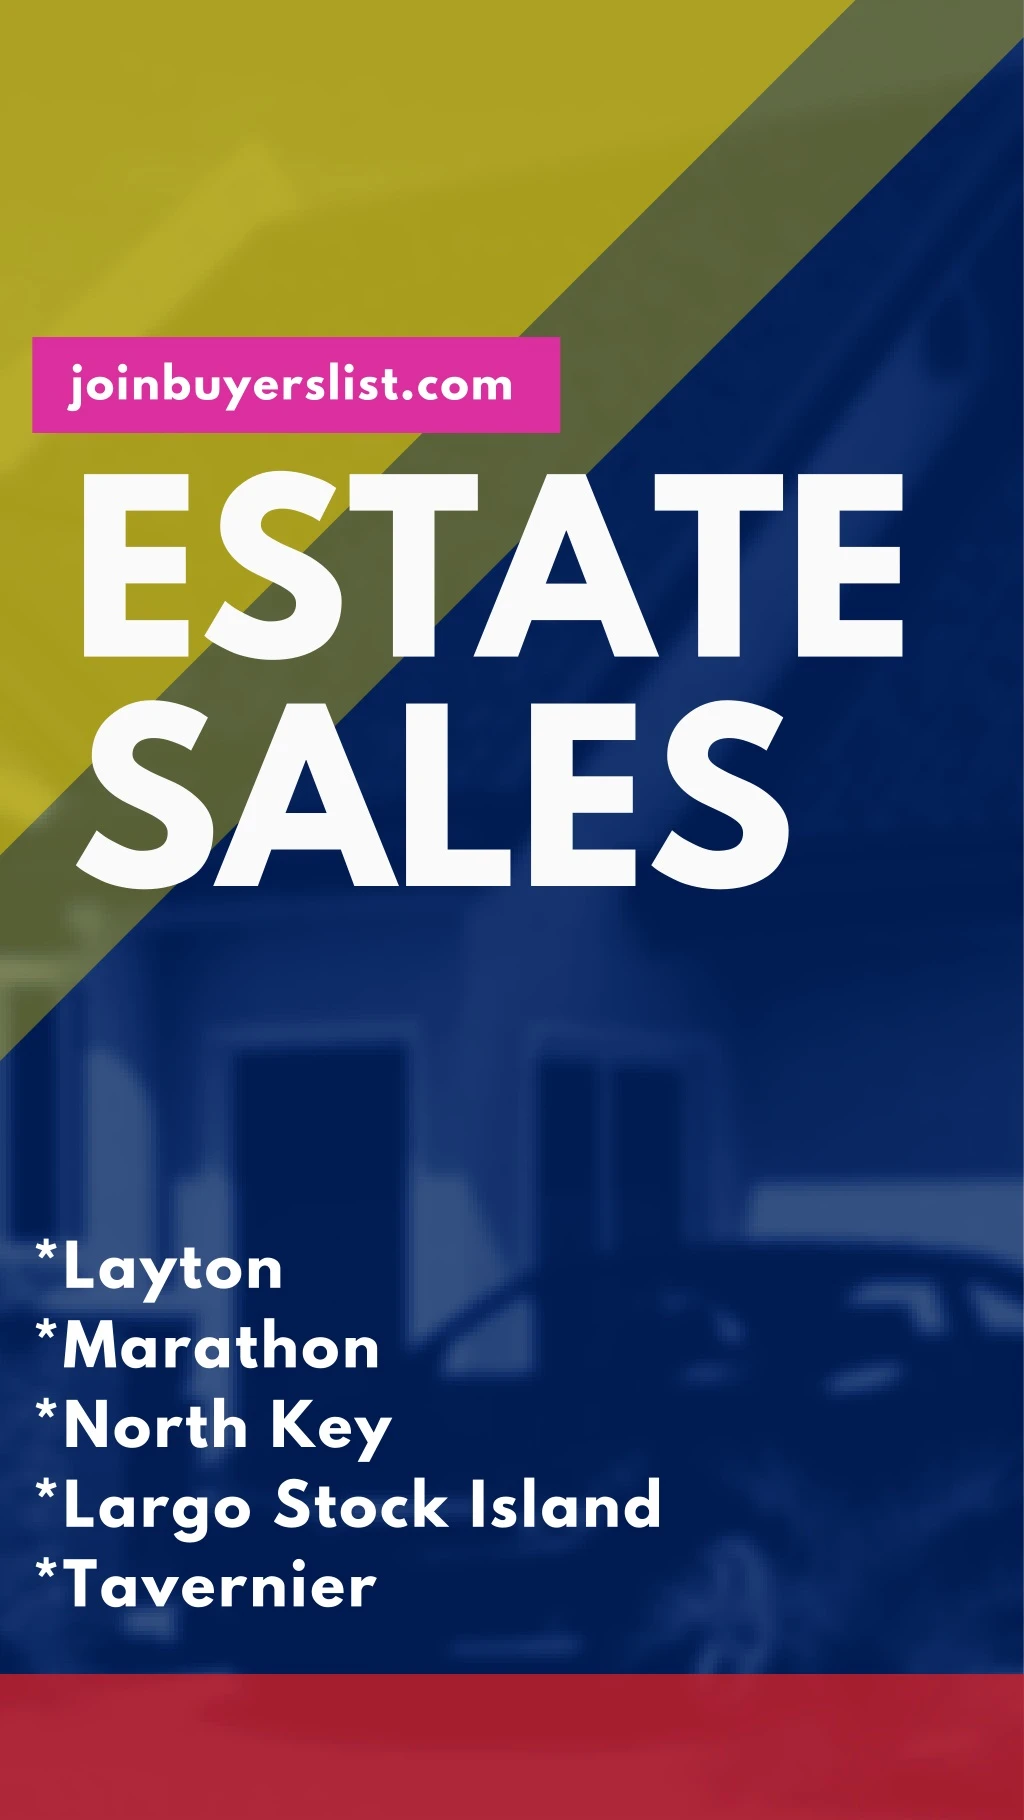 joinbuyerslist com estate sales